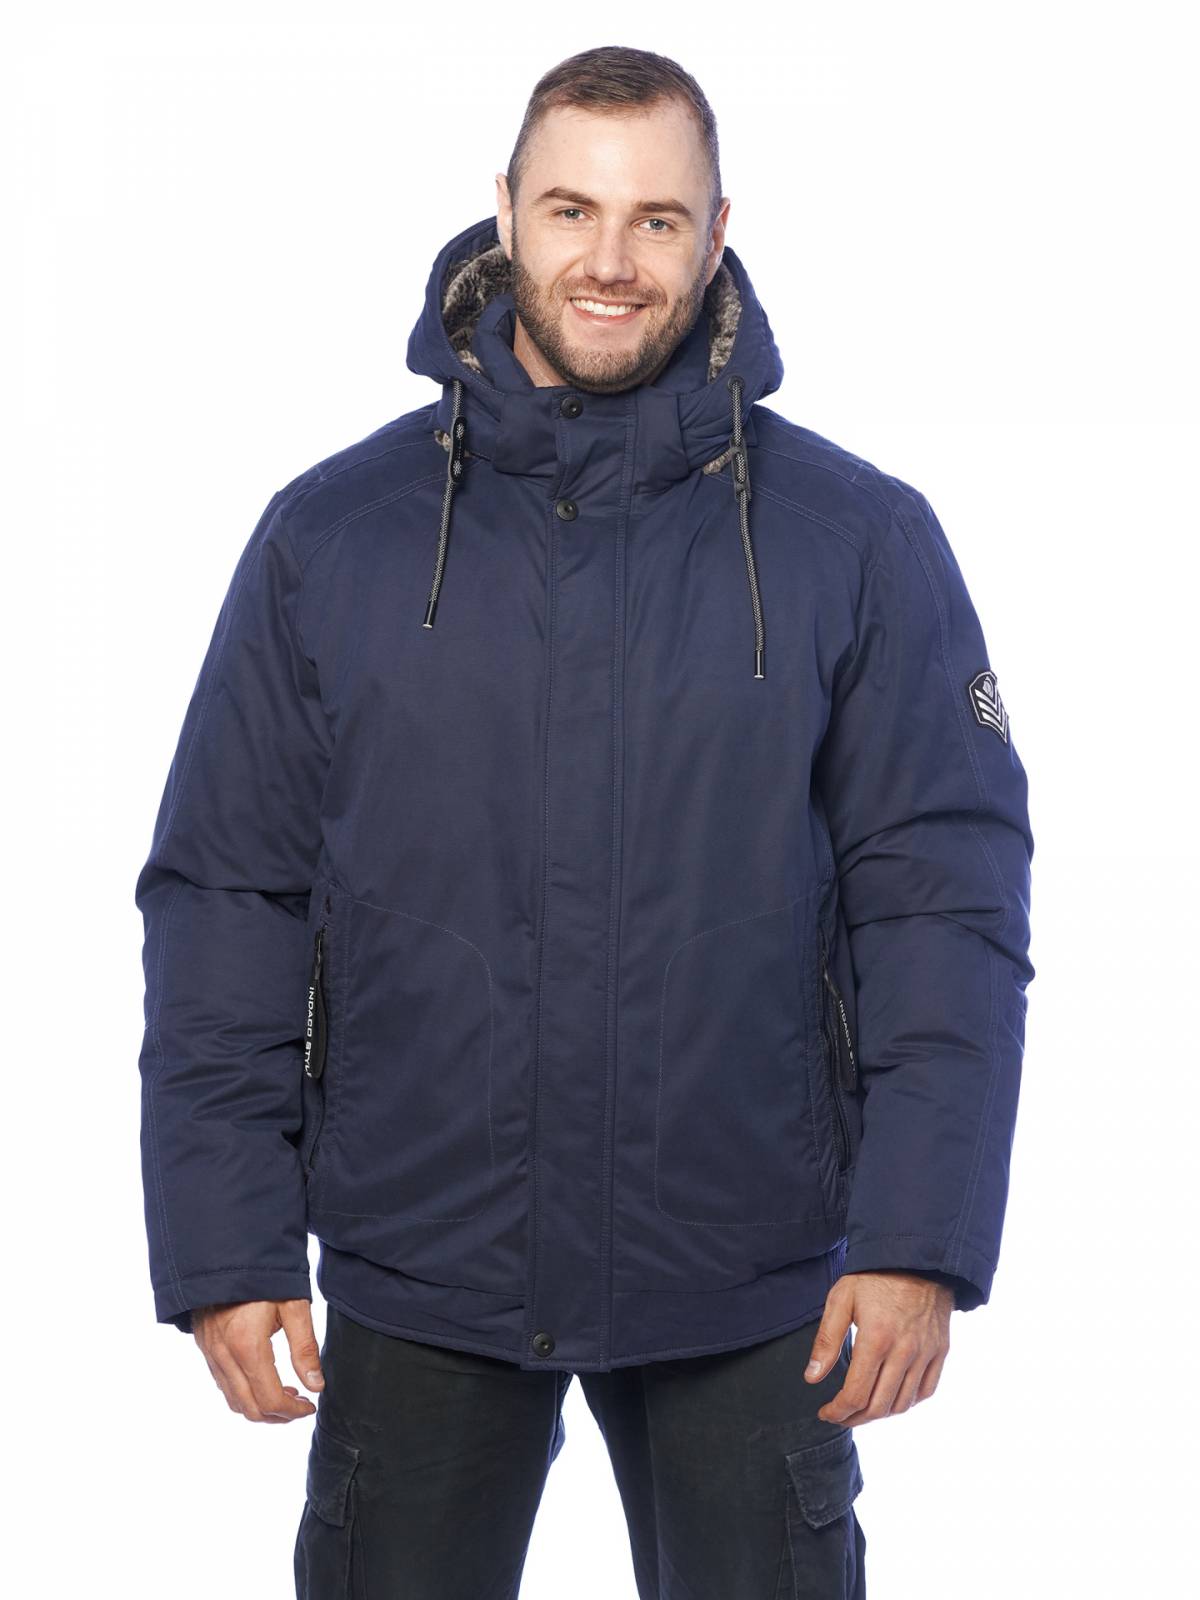 Зимняя куртка мужская Indaco 3649 синяя 58 RU